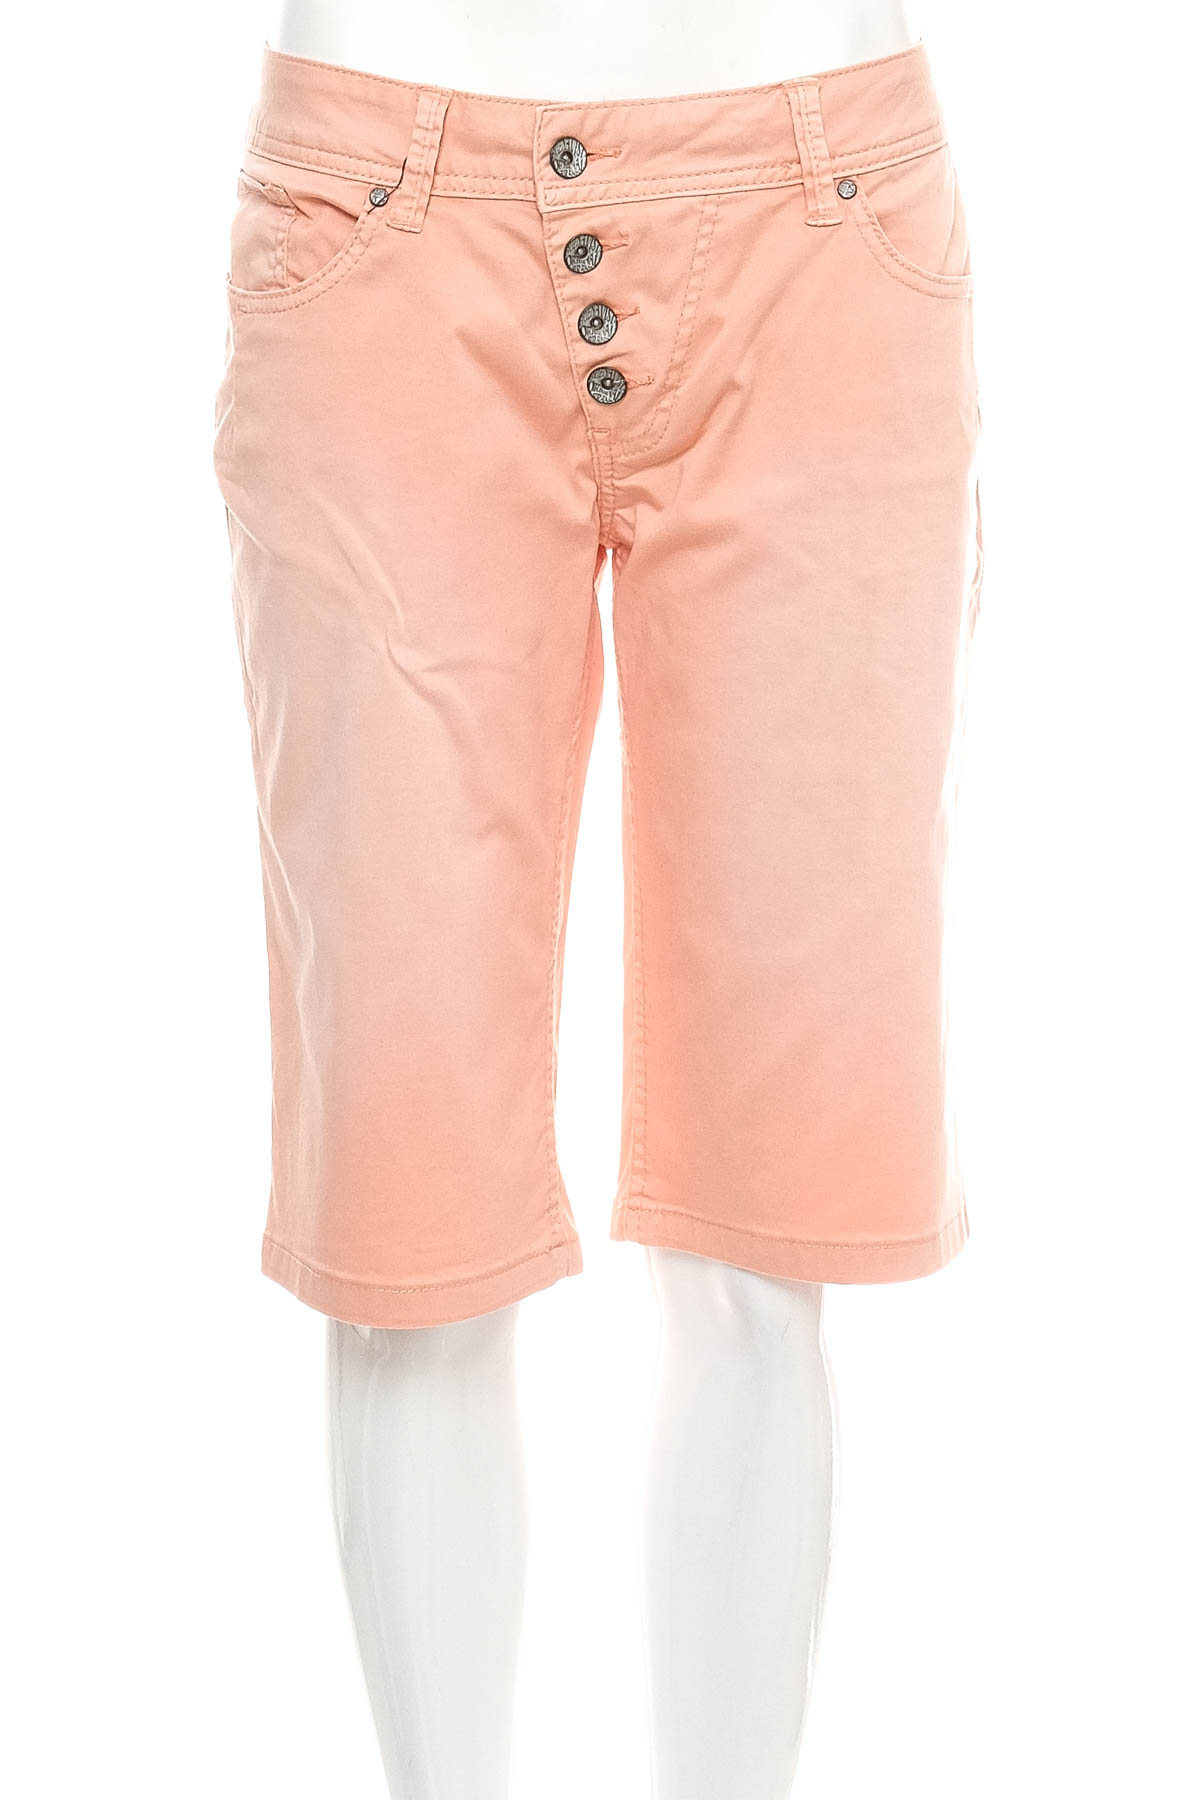 Female shorts - Buena Vista - 0